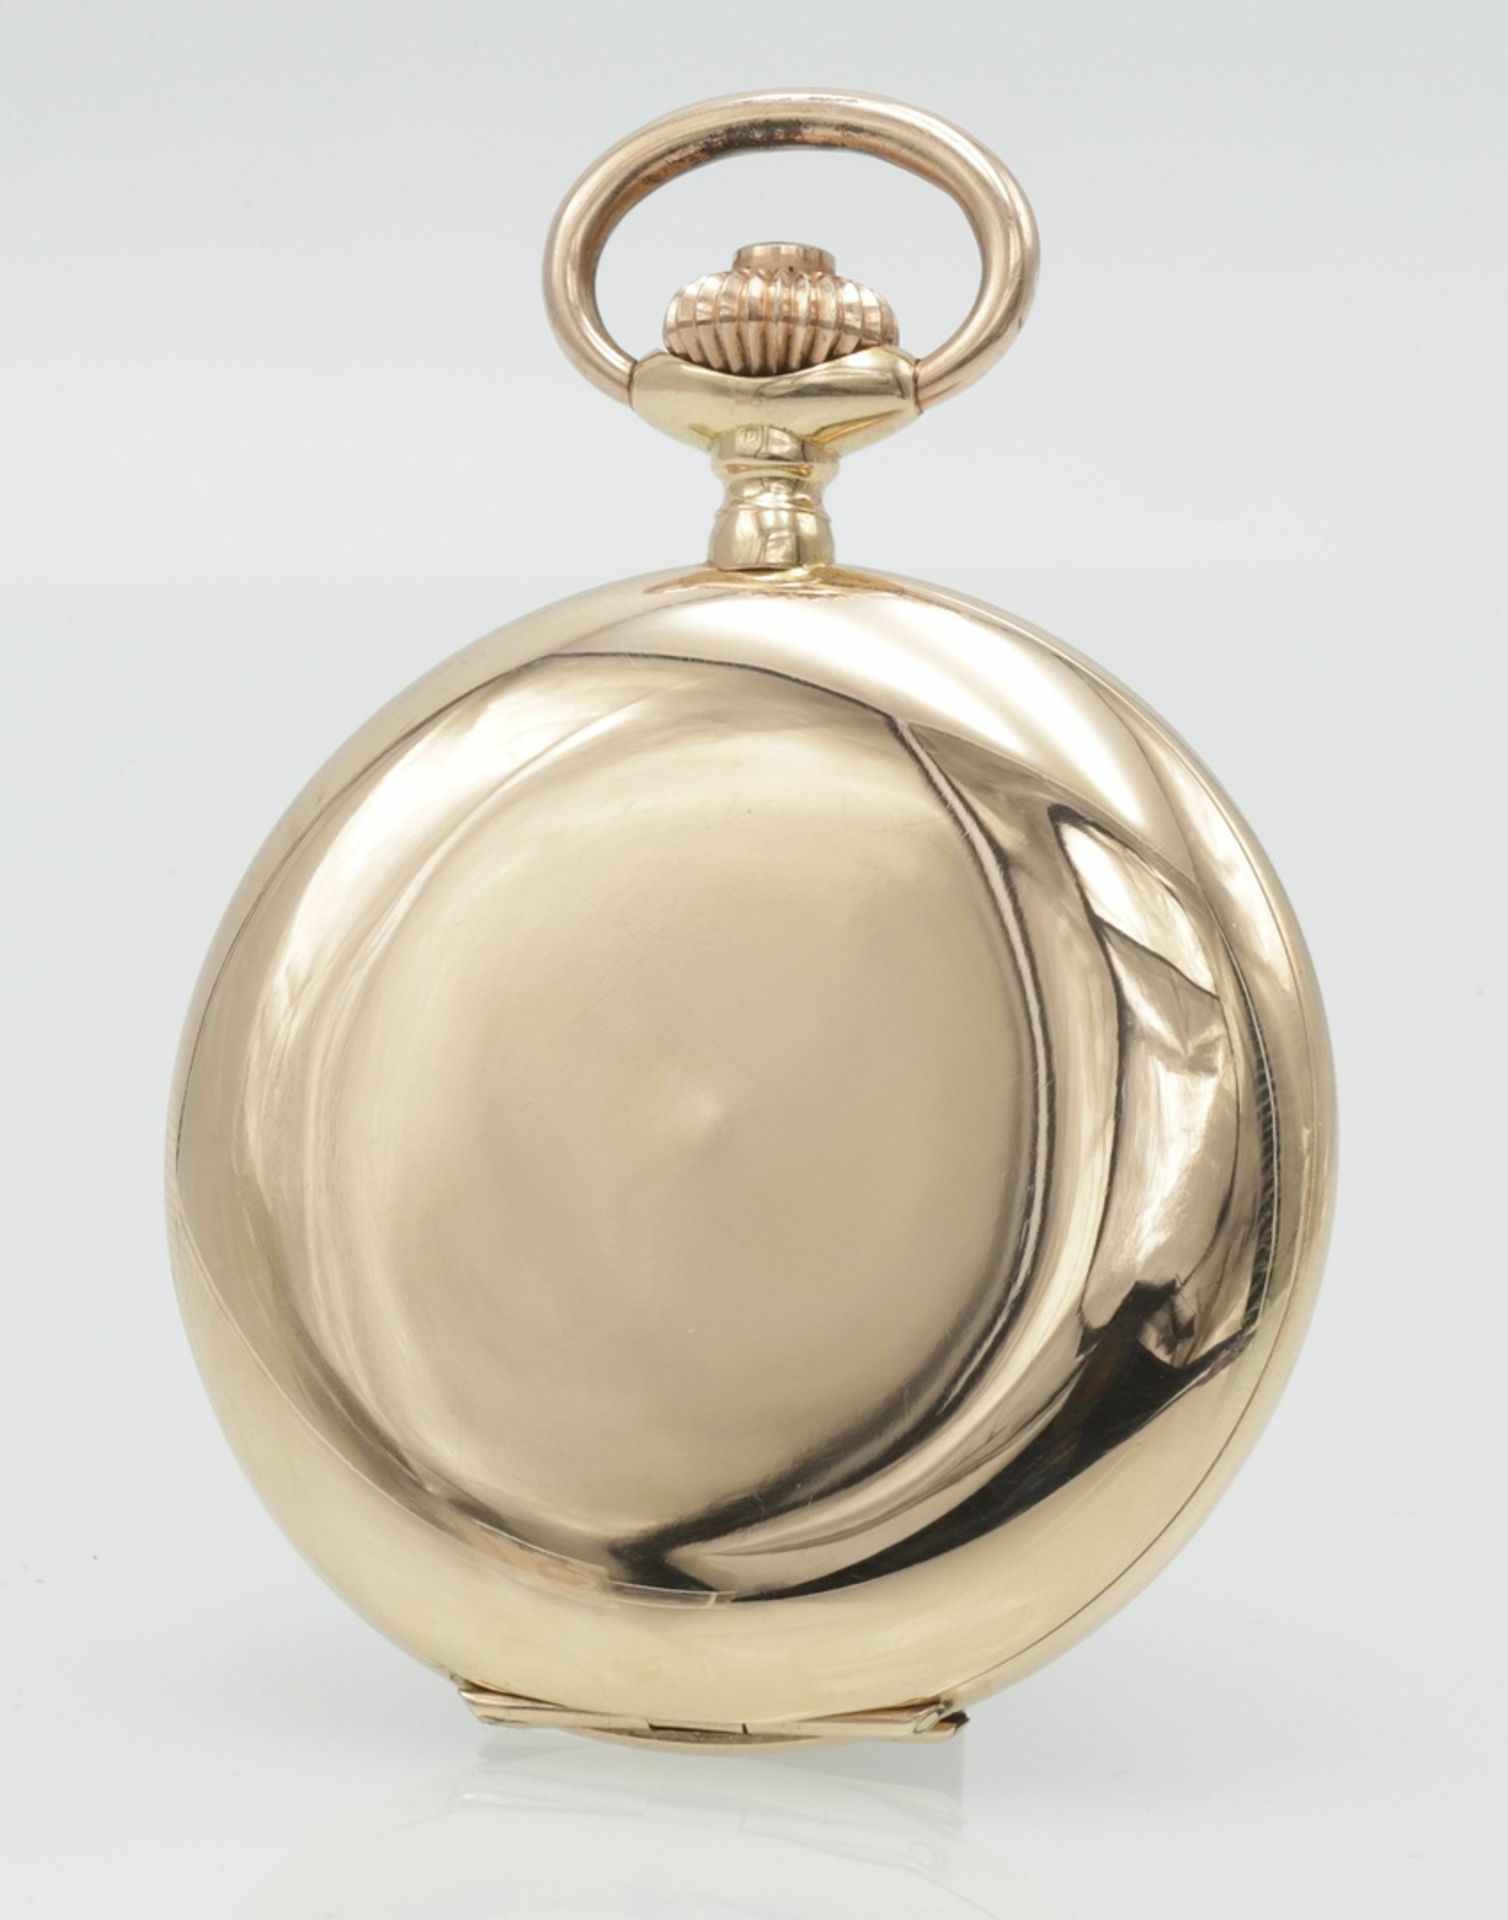 Goldene Savonnette / Taschenuhr, um 1900 - Image 2 of 5